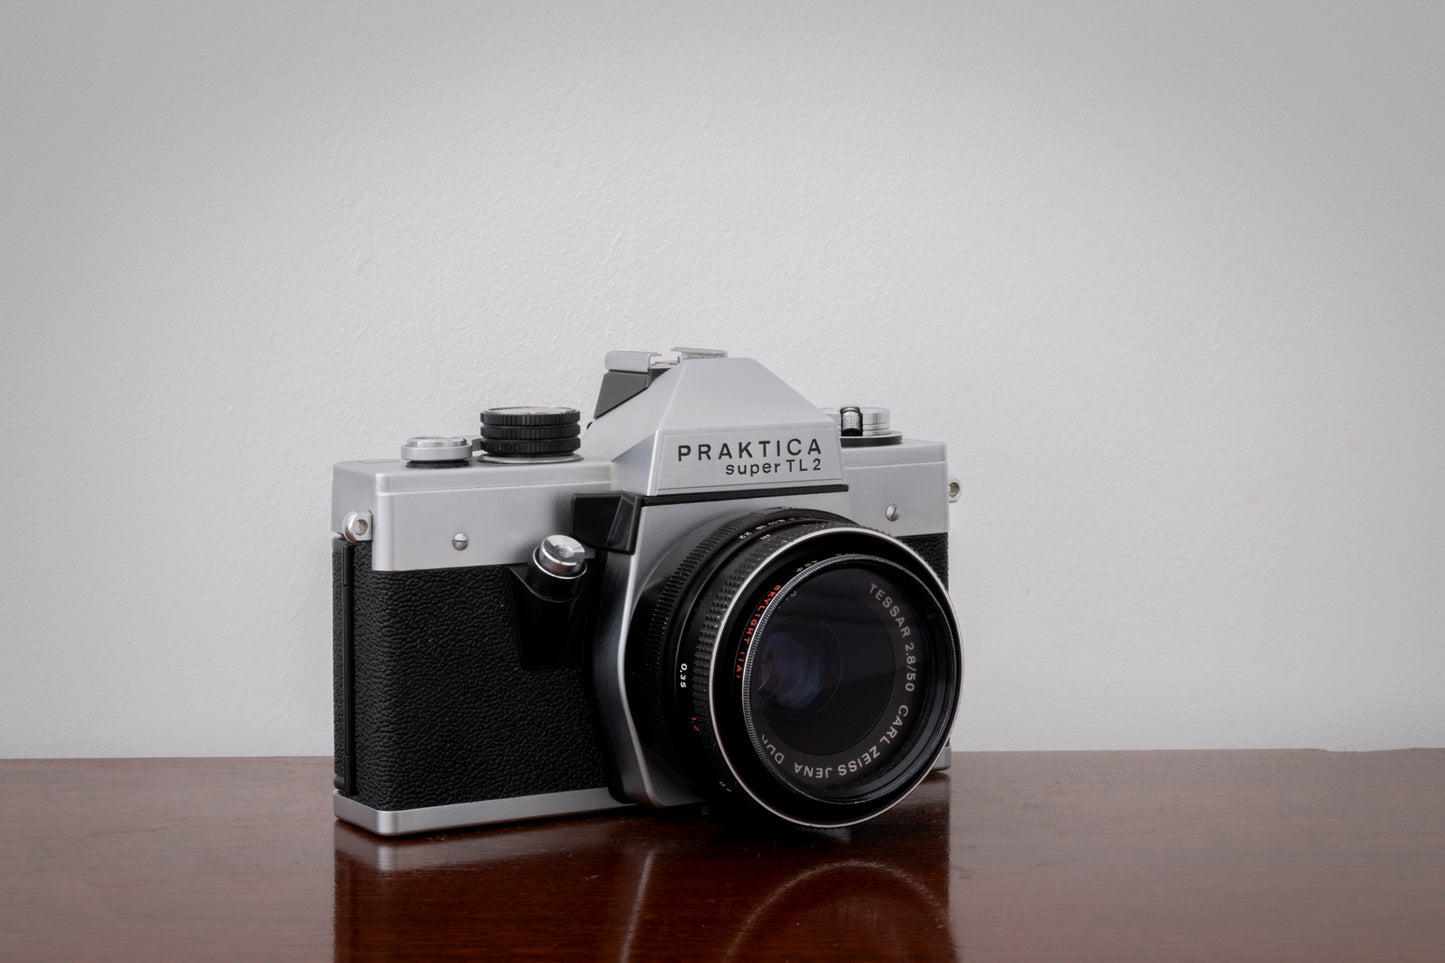 1975 Praktica Super TL2 35mm Film Camera Kit with Carl Zeiss Tessar 50mm F2.8 Lens